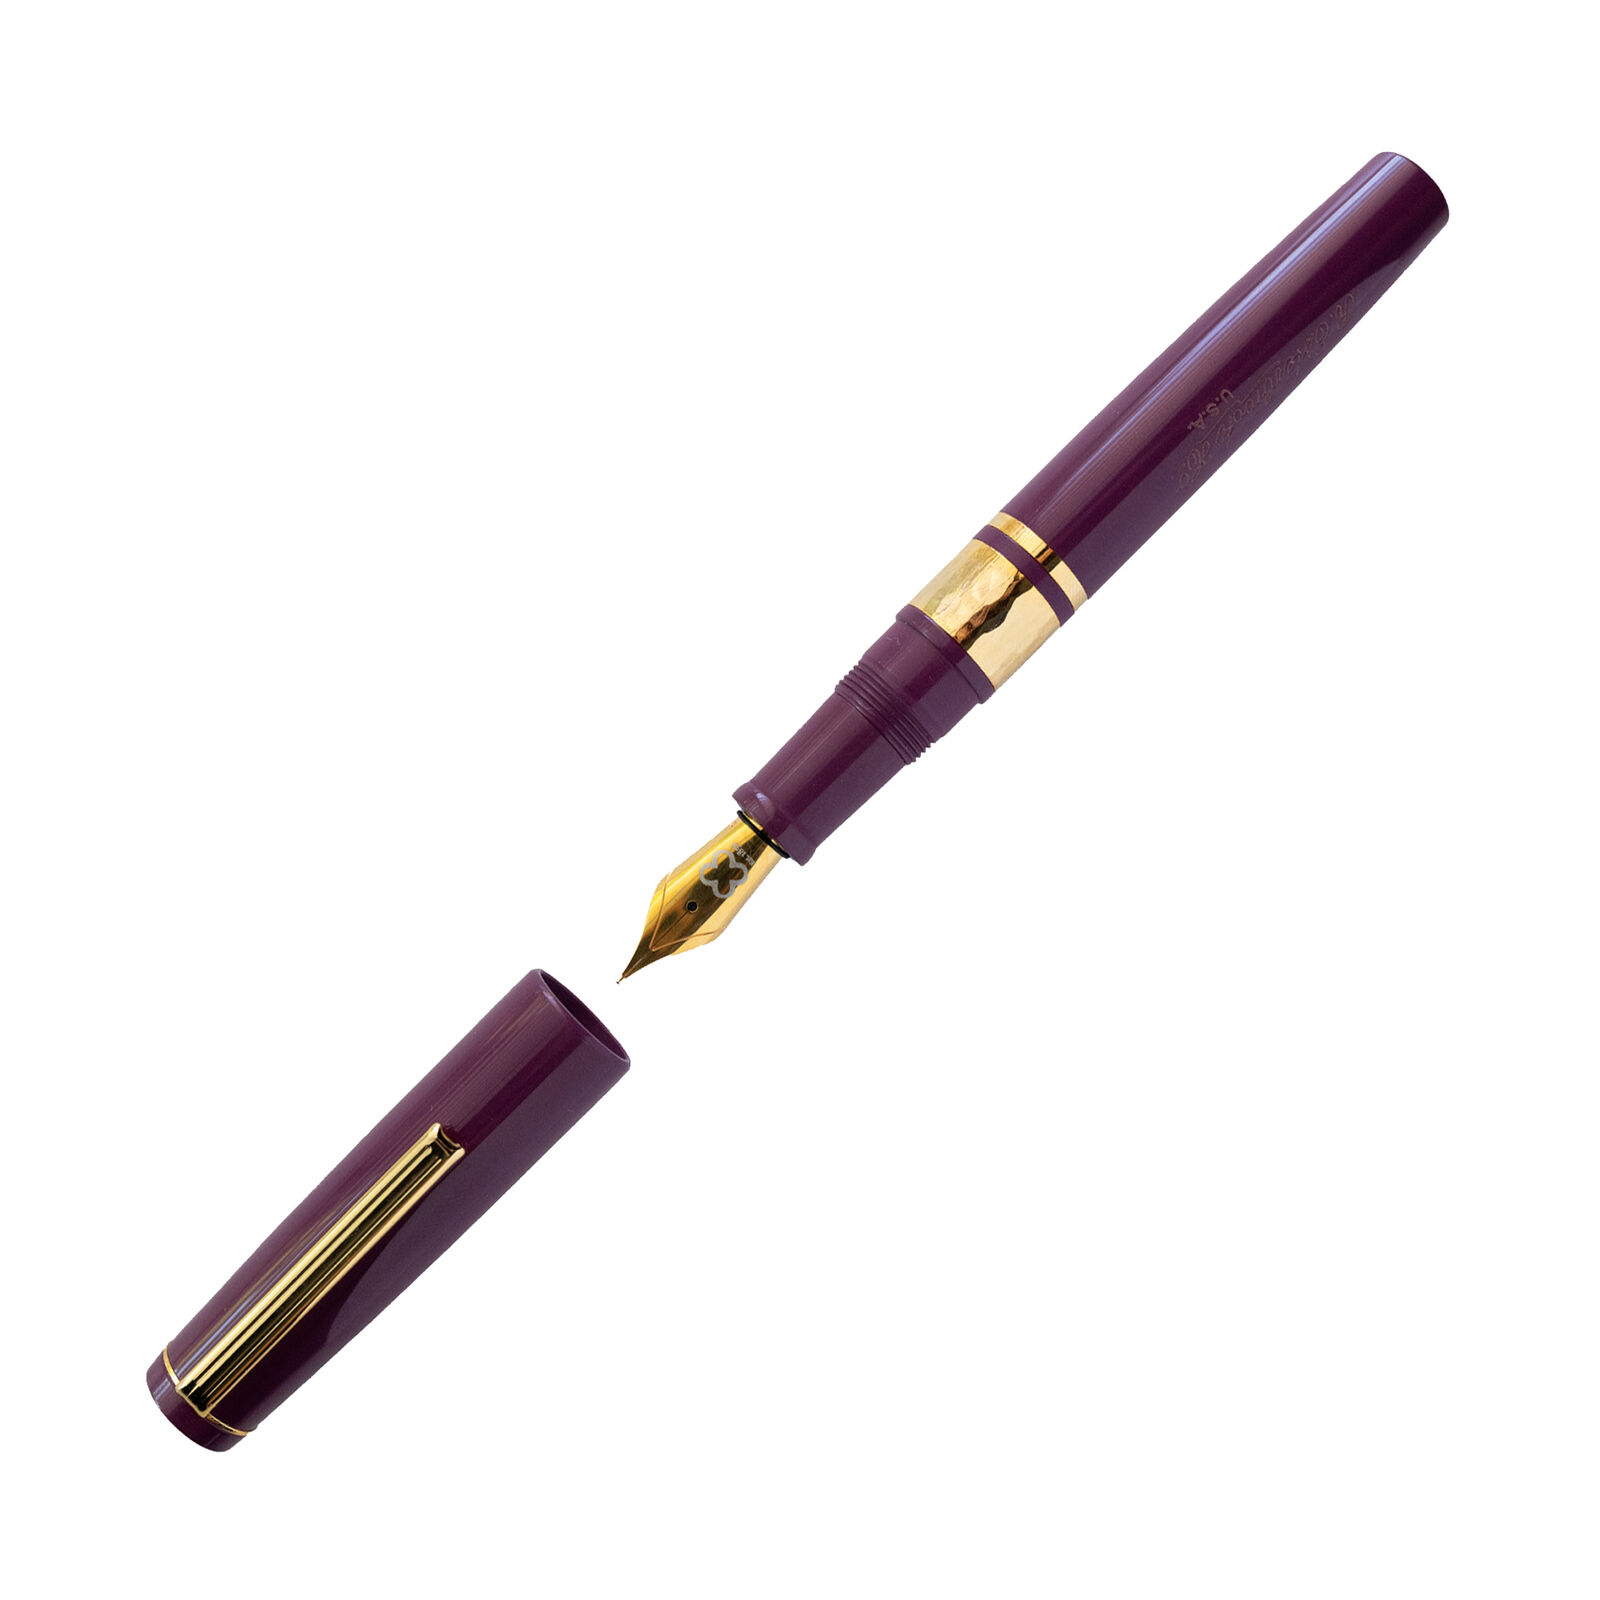 Esterbrook Model J Fountain Pen in Blackberry Ebonite with Gold Trim - Medium